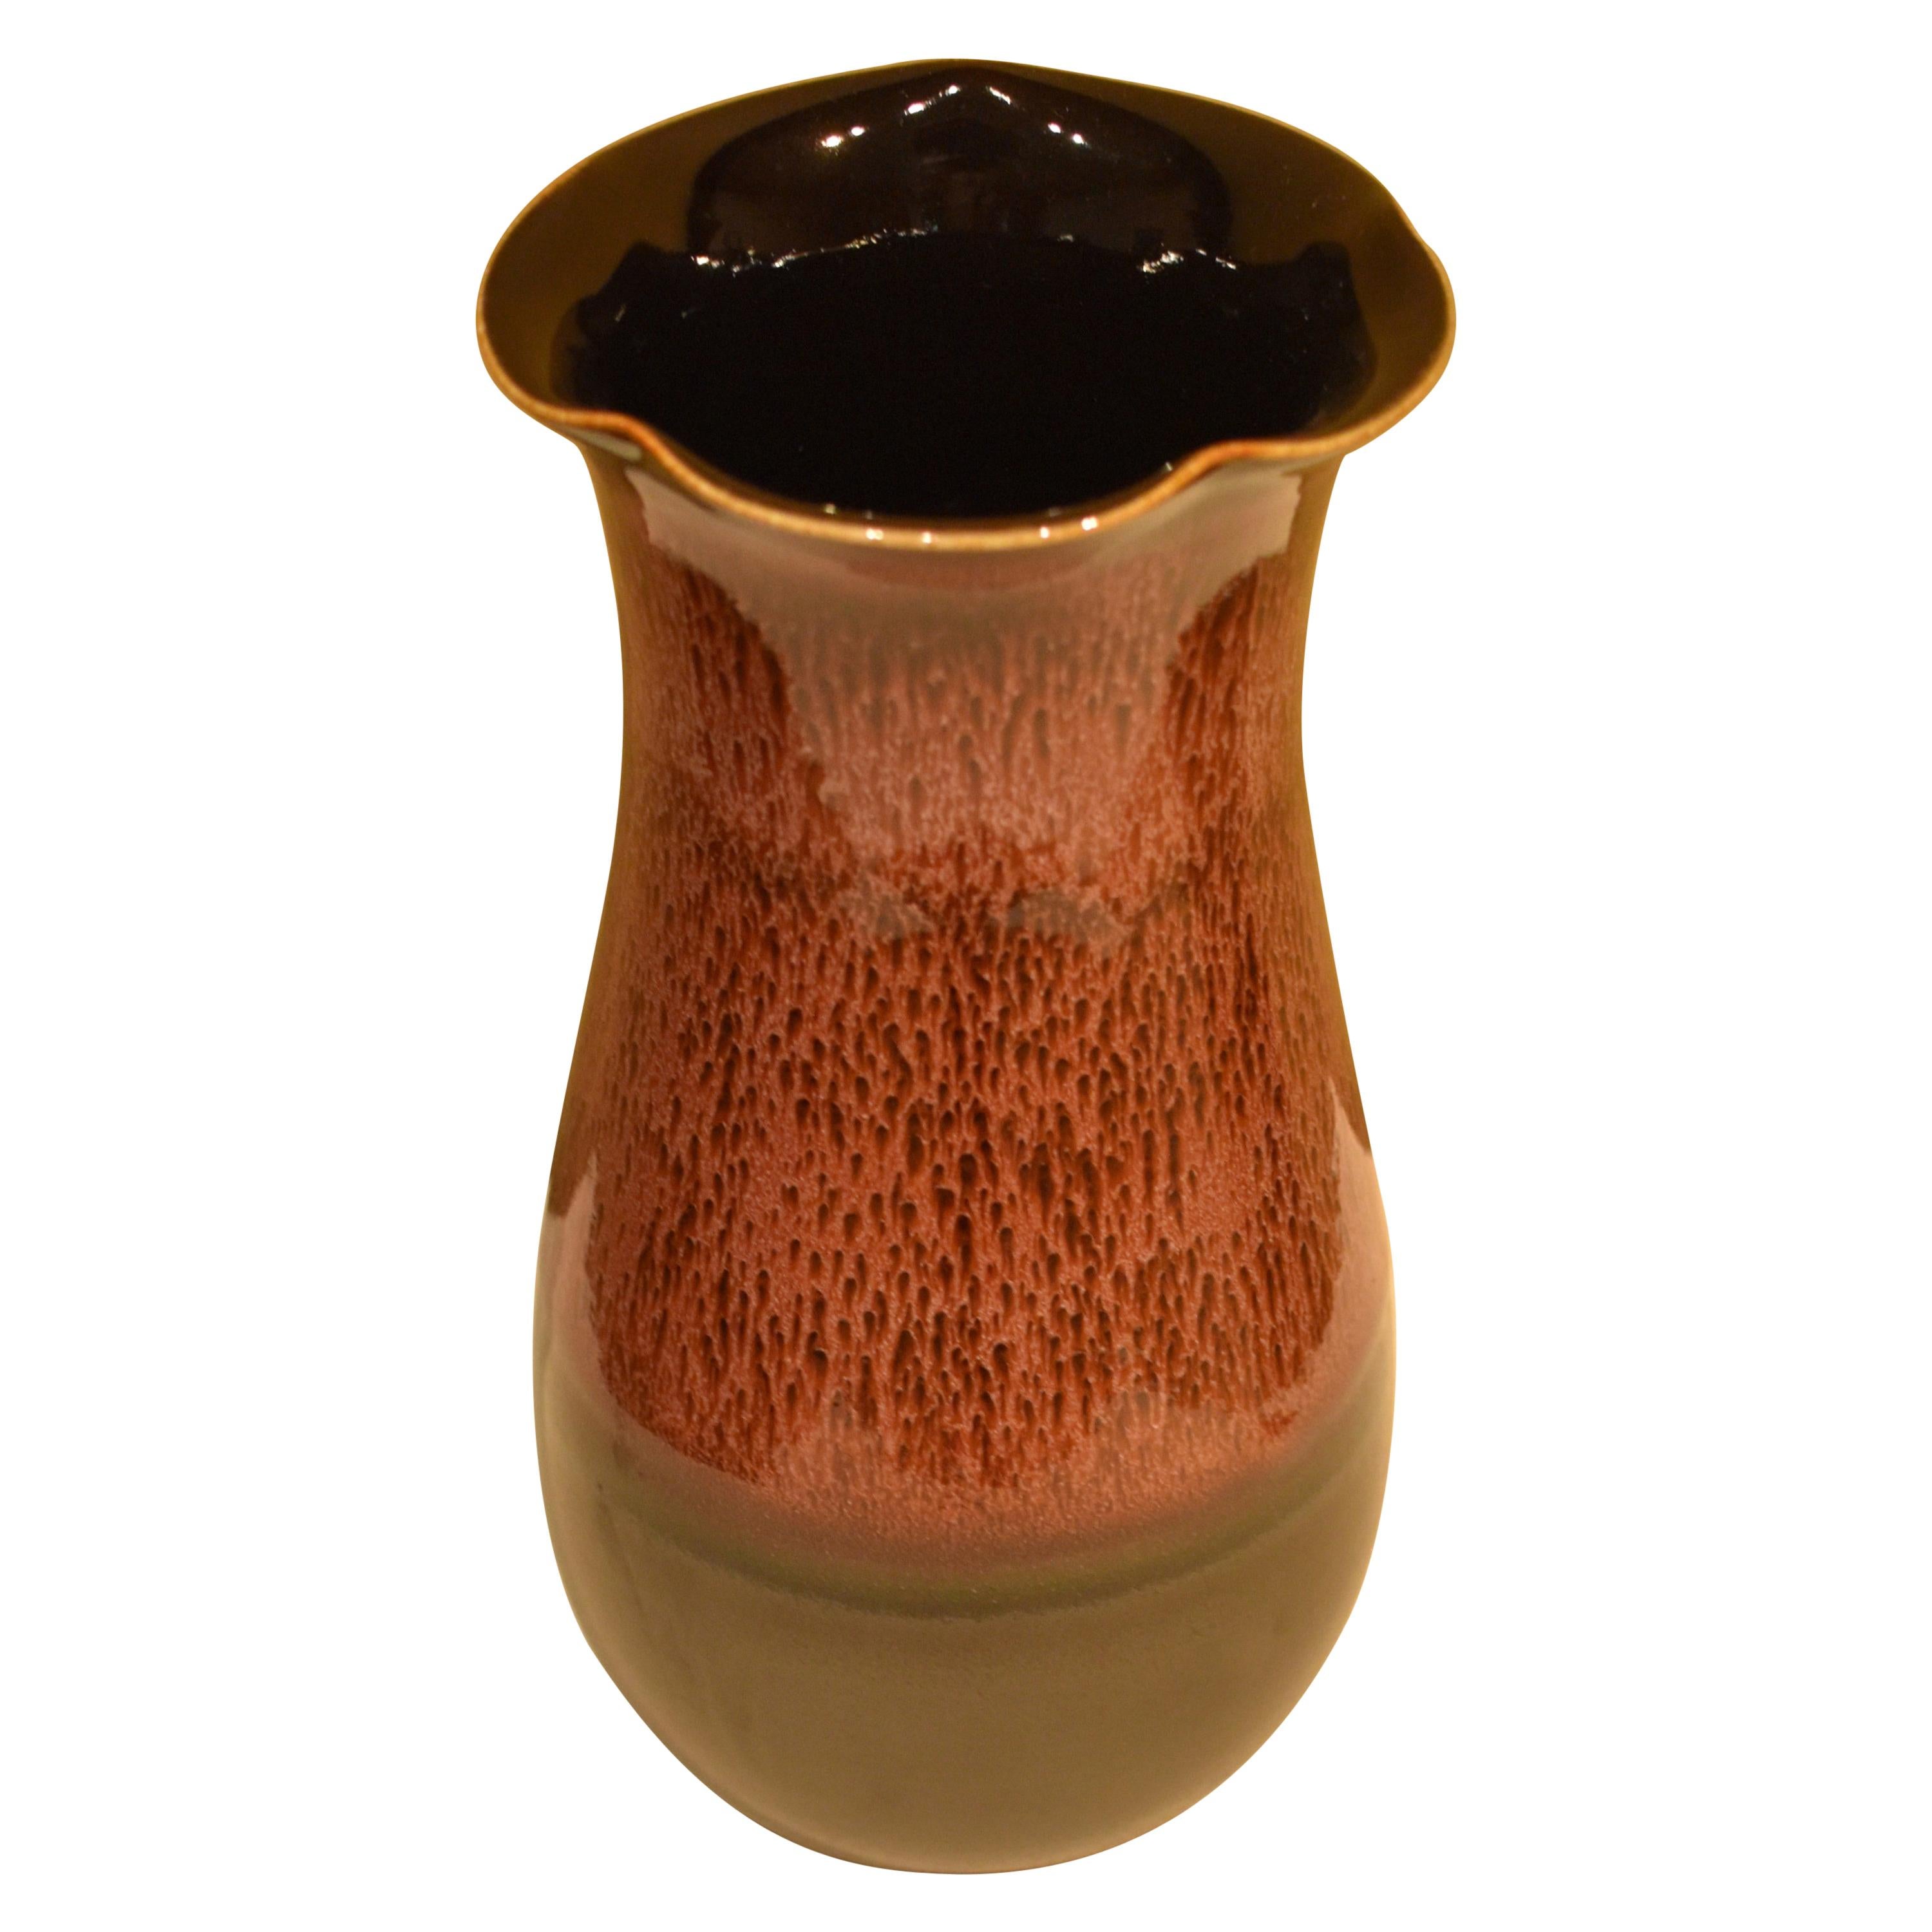 Brown Hand-Glazed Porcelain Vase by Japanese Master Artist